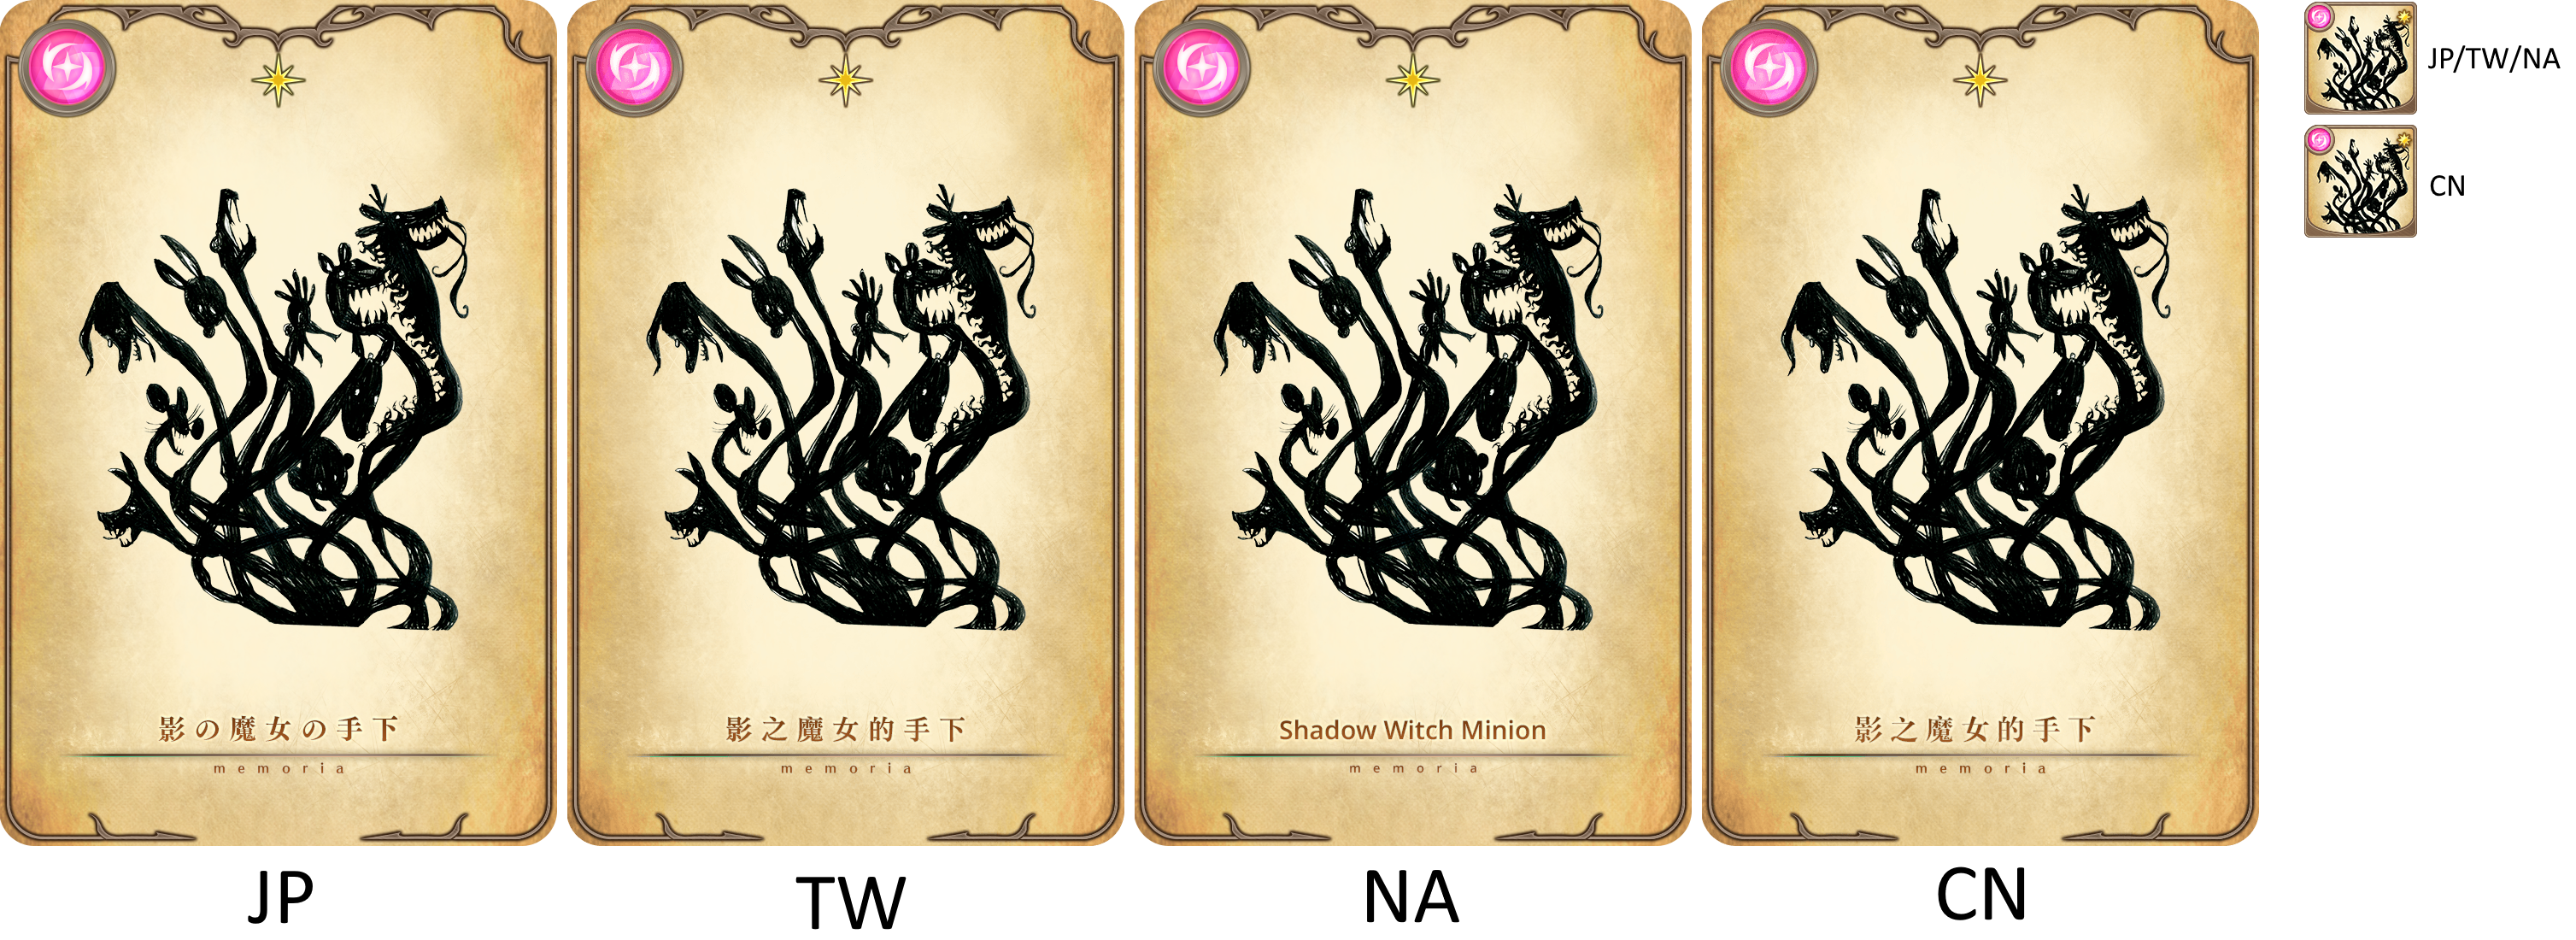 Puella Magi Madoka Magica Side Story: Magia Record - Minions of the Shadow Witch [memoria_1008]